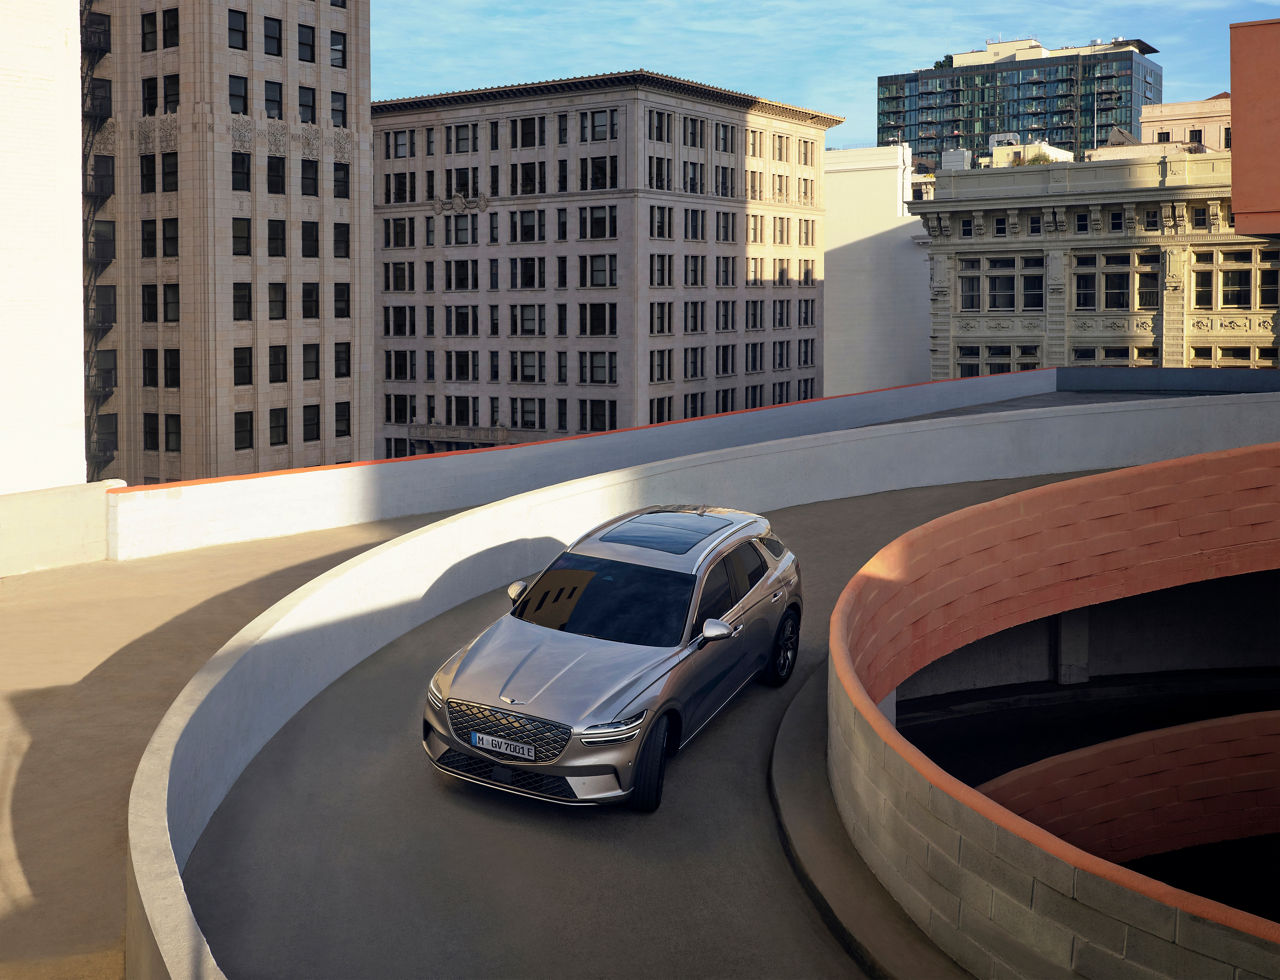 Grey Genesis GV70 drives down the ramp of a multi-storey car park